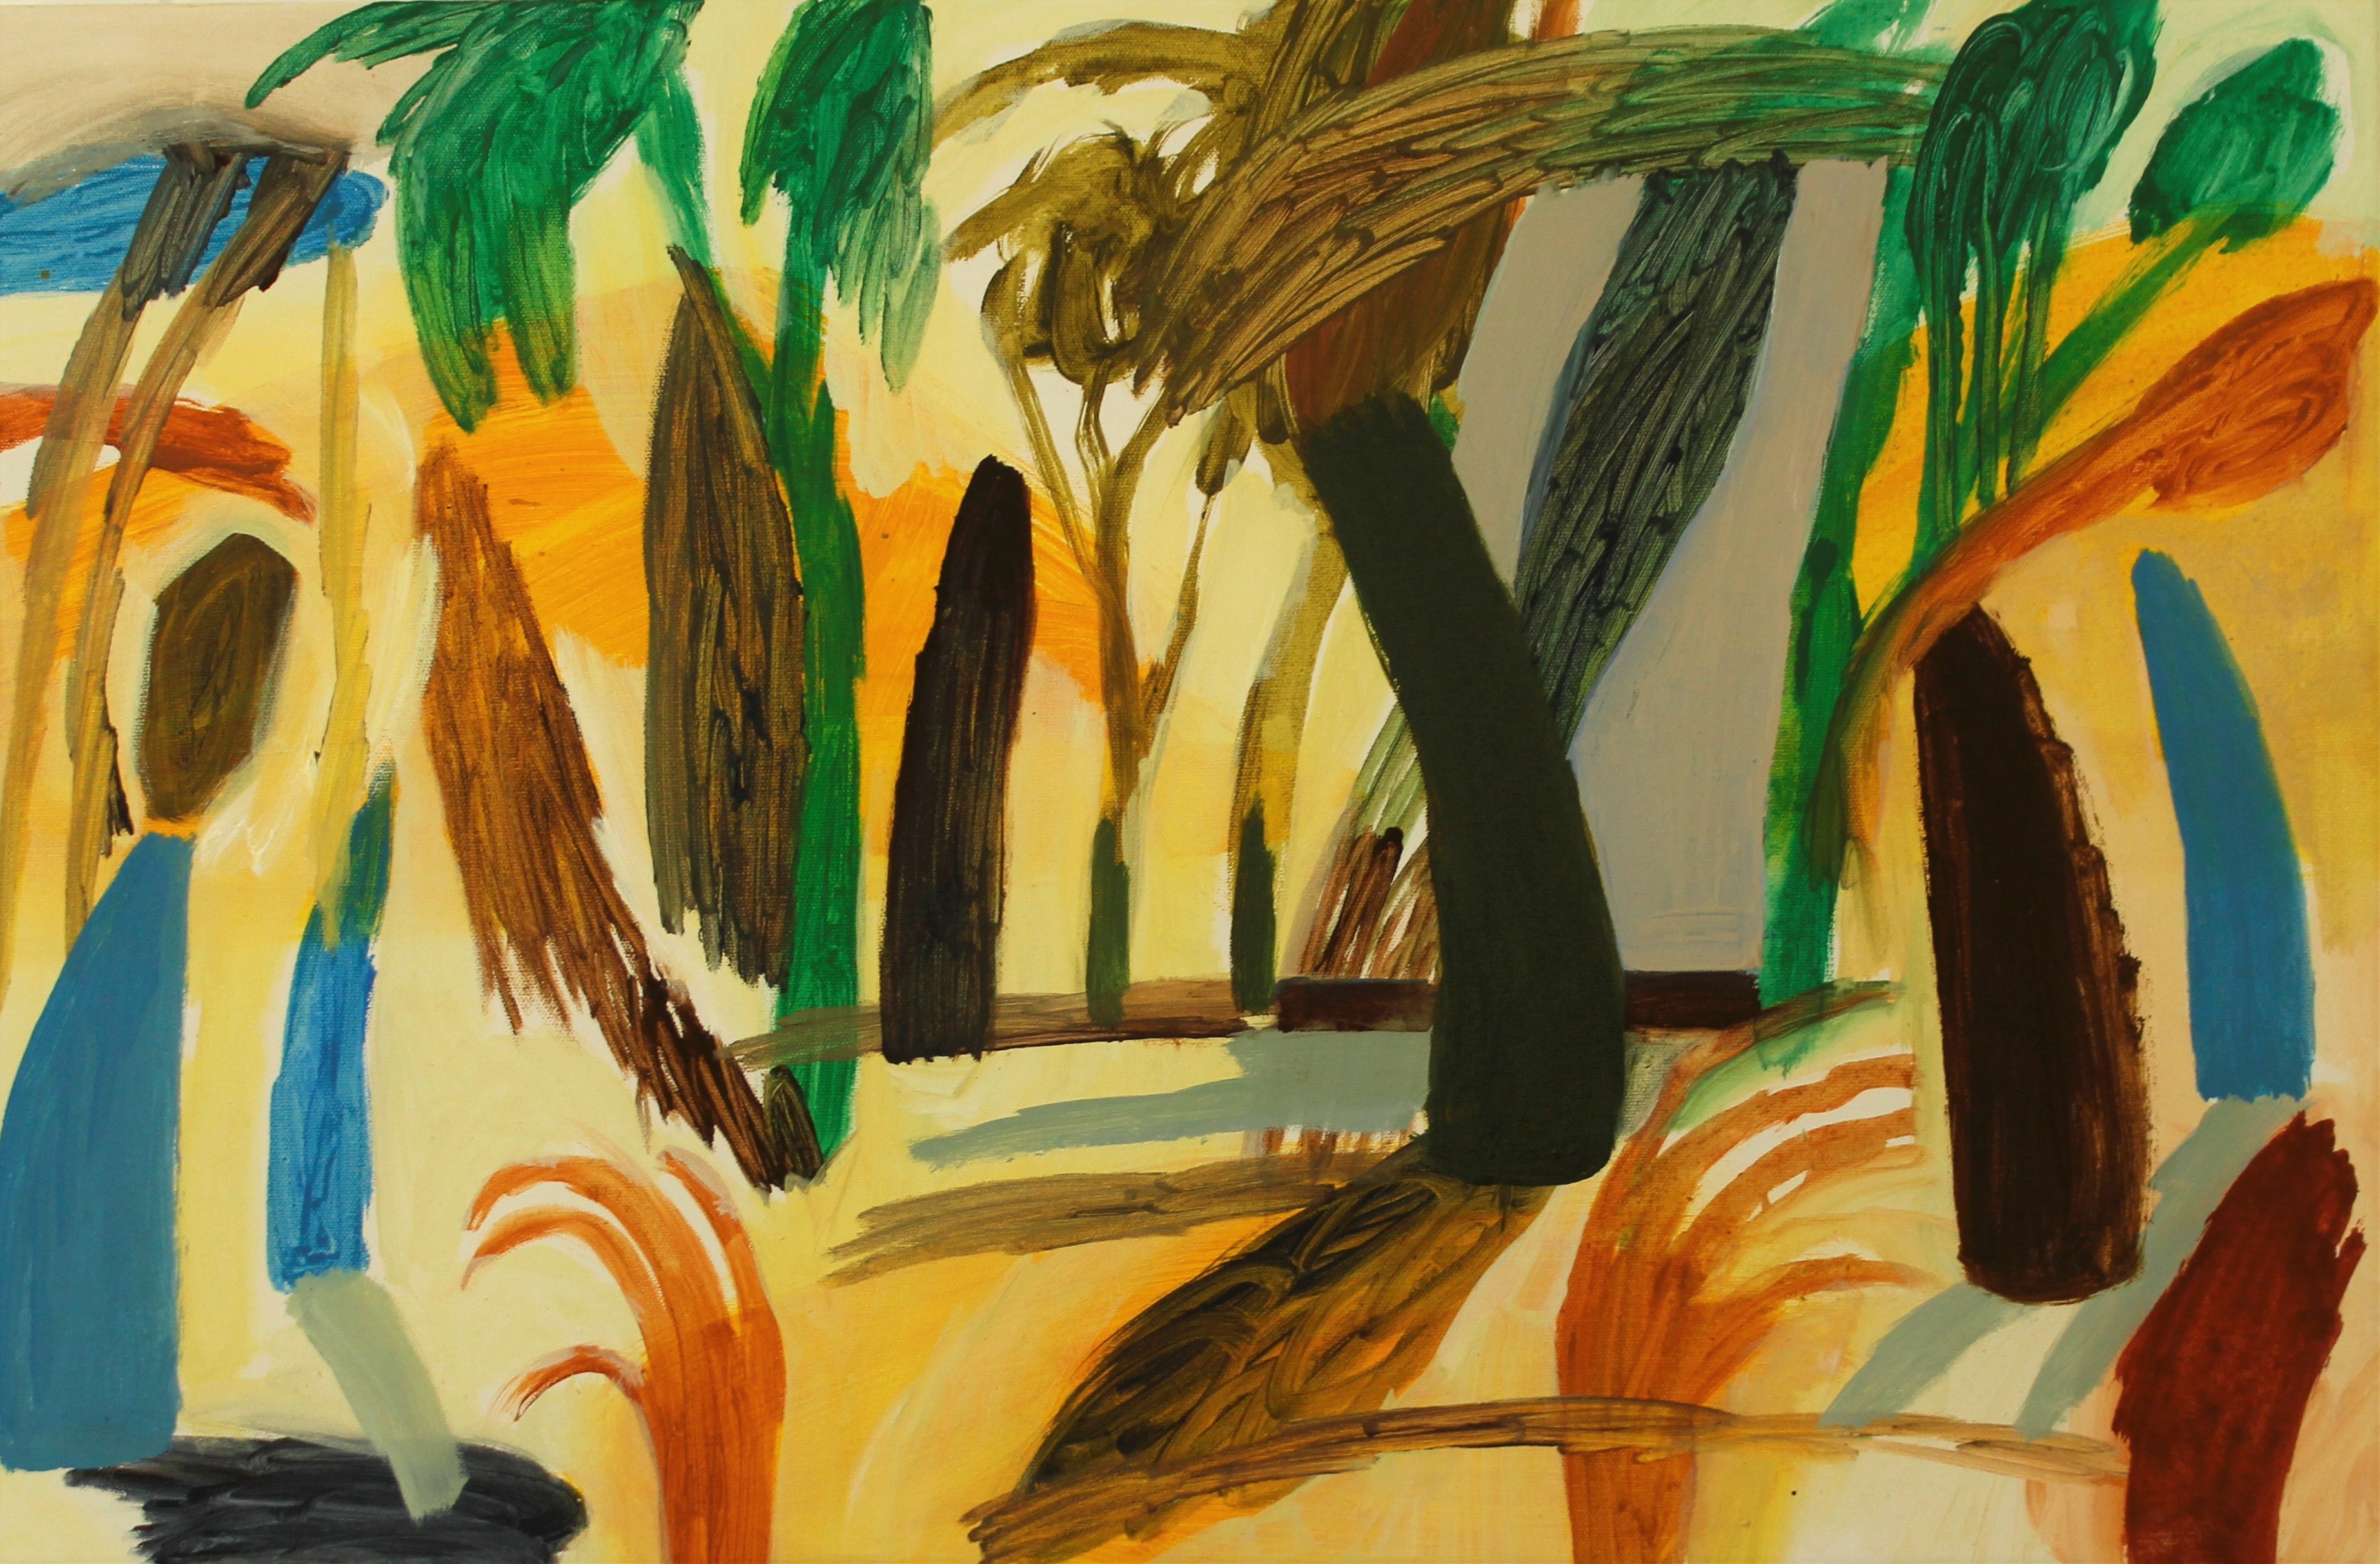 Between the Trees' by David Usher | Lethbridge Landscape Prize 2022 Finalists | Lethbridge Gallery